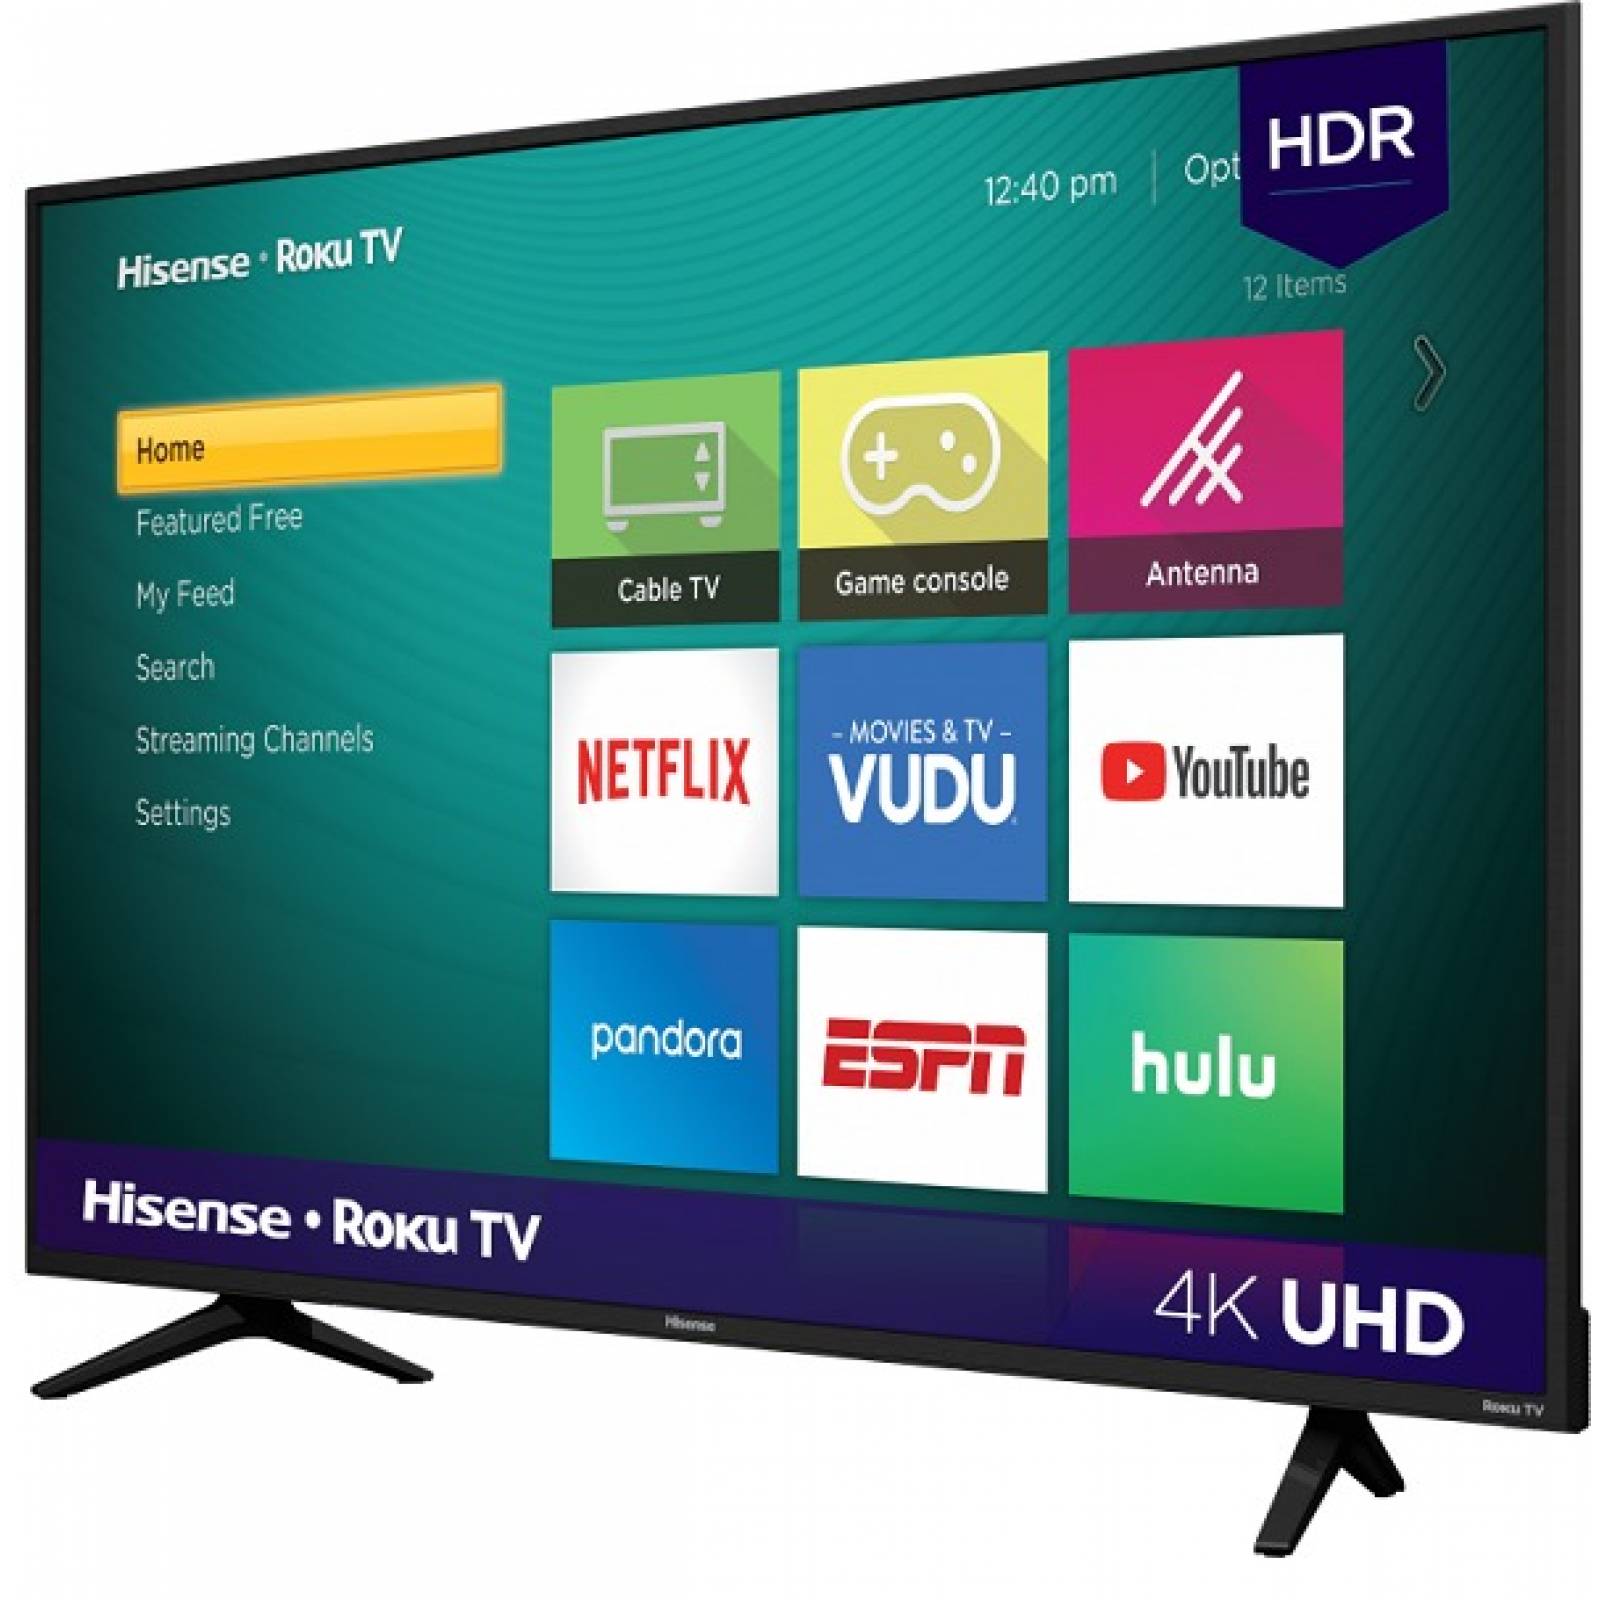 Smart TV Hisense 60 4K UHD Smart TV HDR Roku TV 60R6E - Reacondicionado